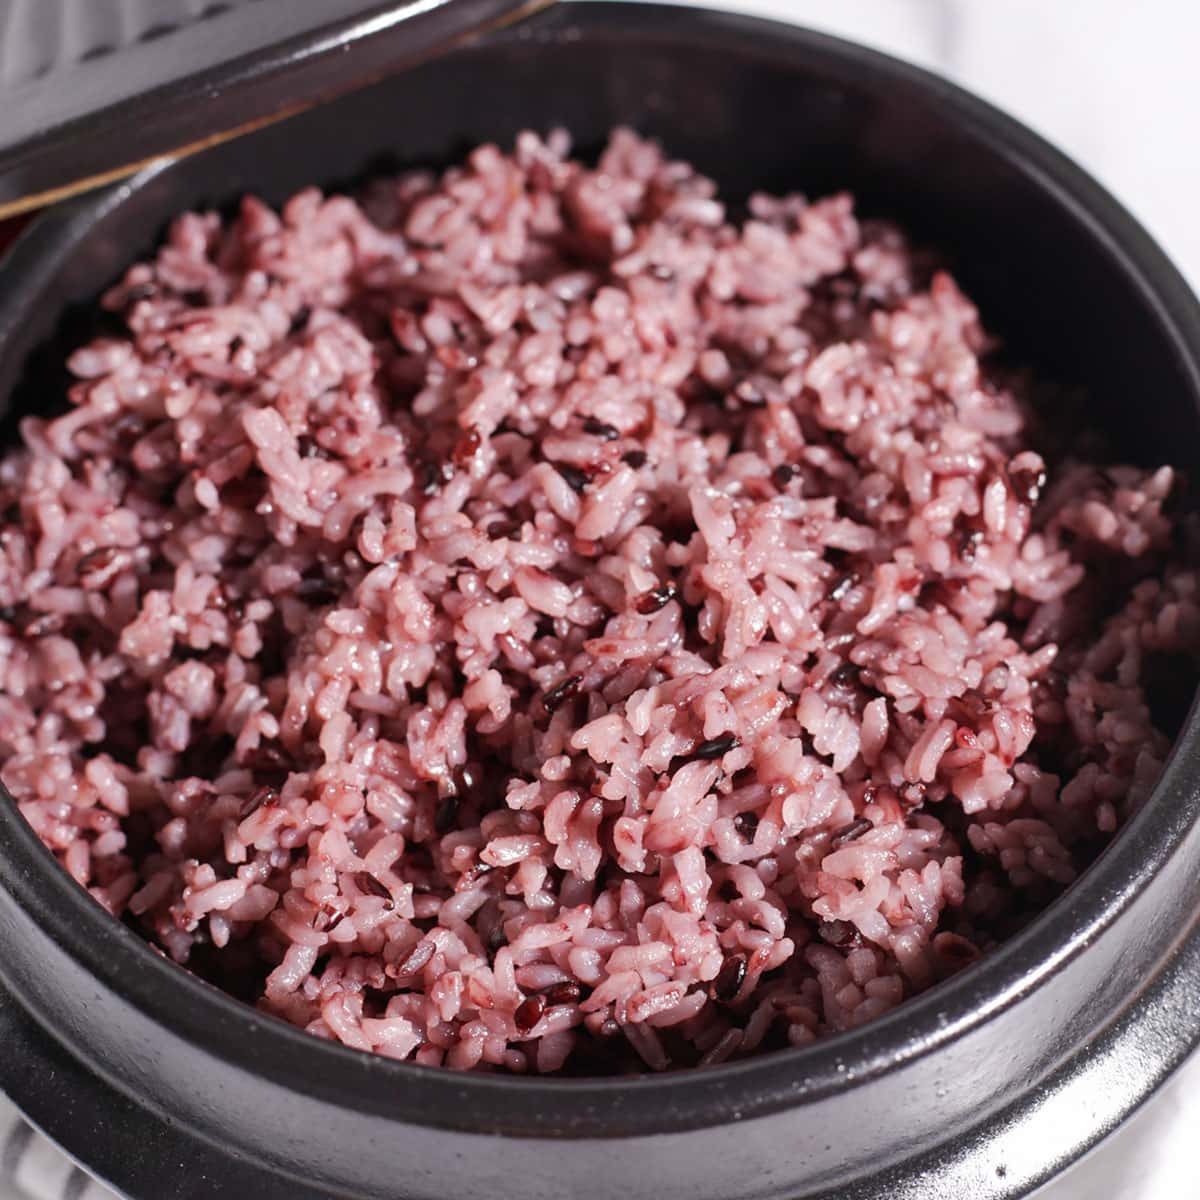 https://twoplaidaprons.com/wp-content/uploads/2022/03/Korean-purple-rice-cooked-in-stone-pot-thumbnail.jpg